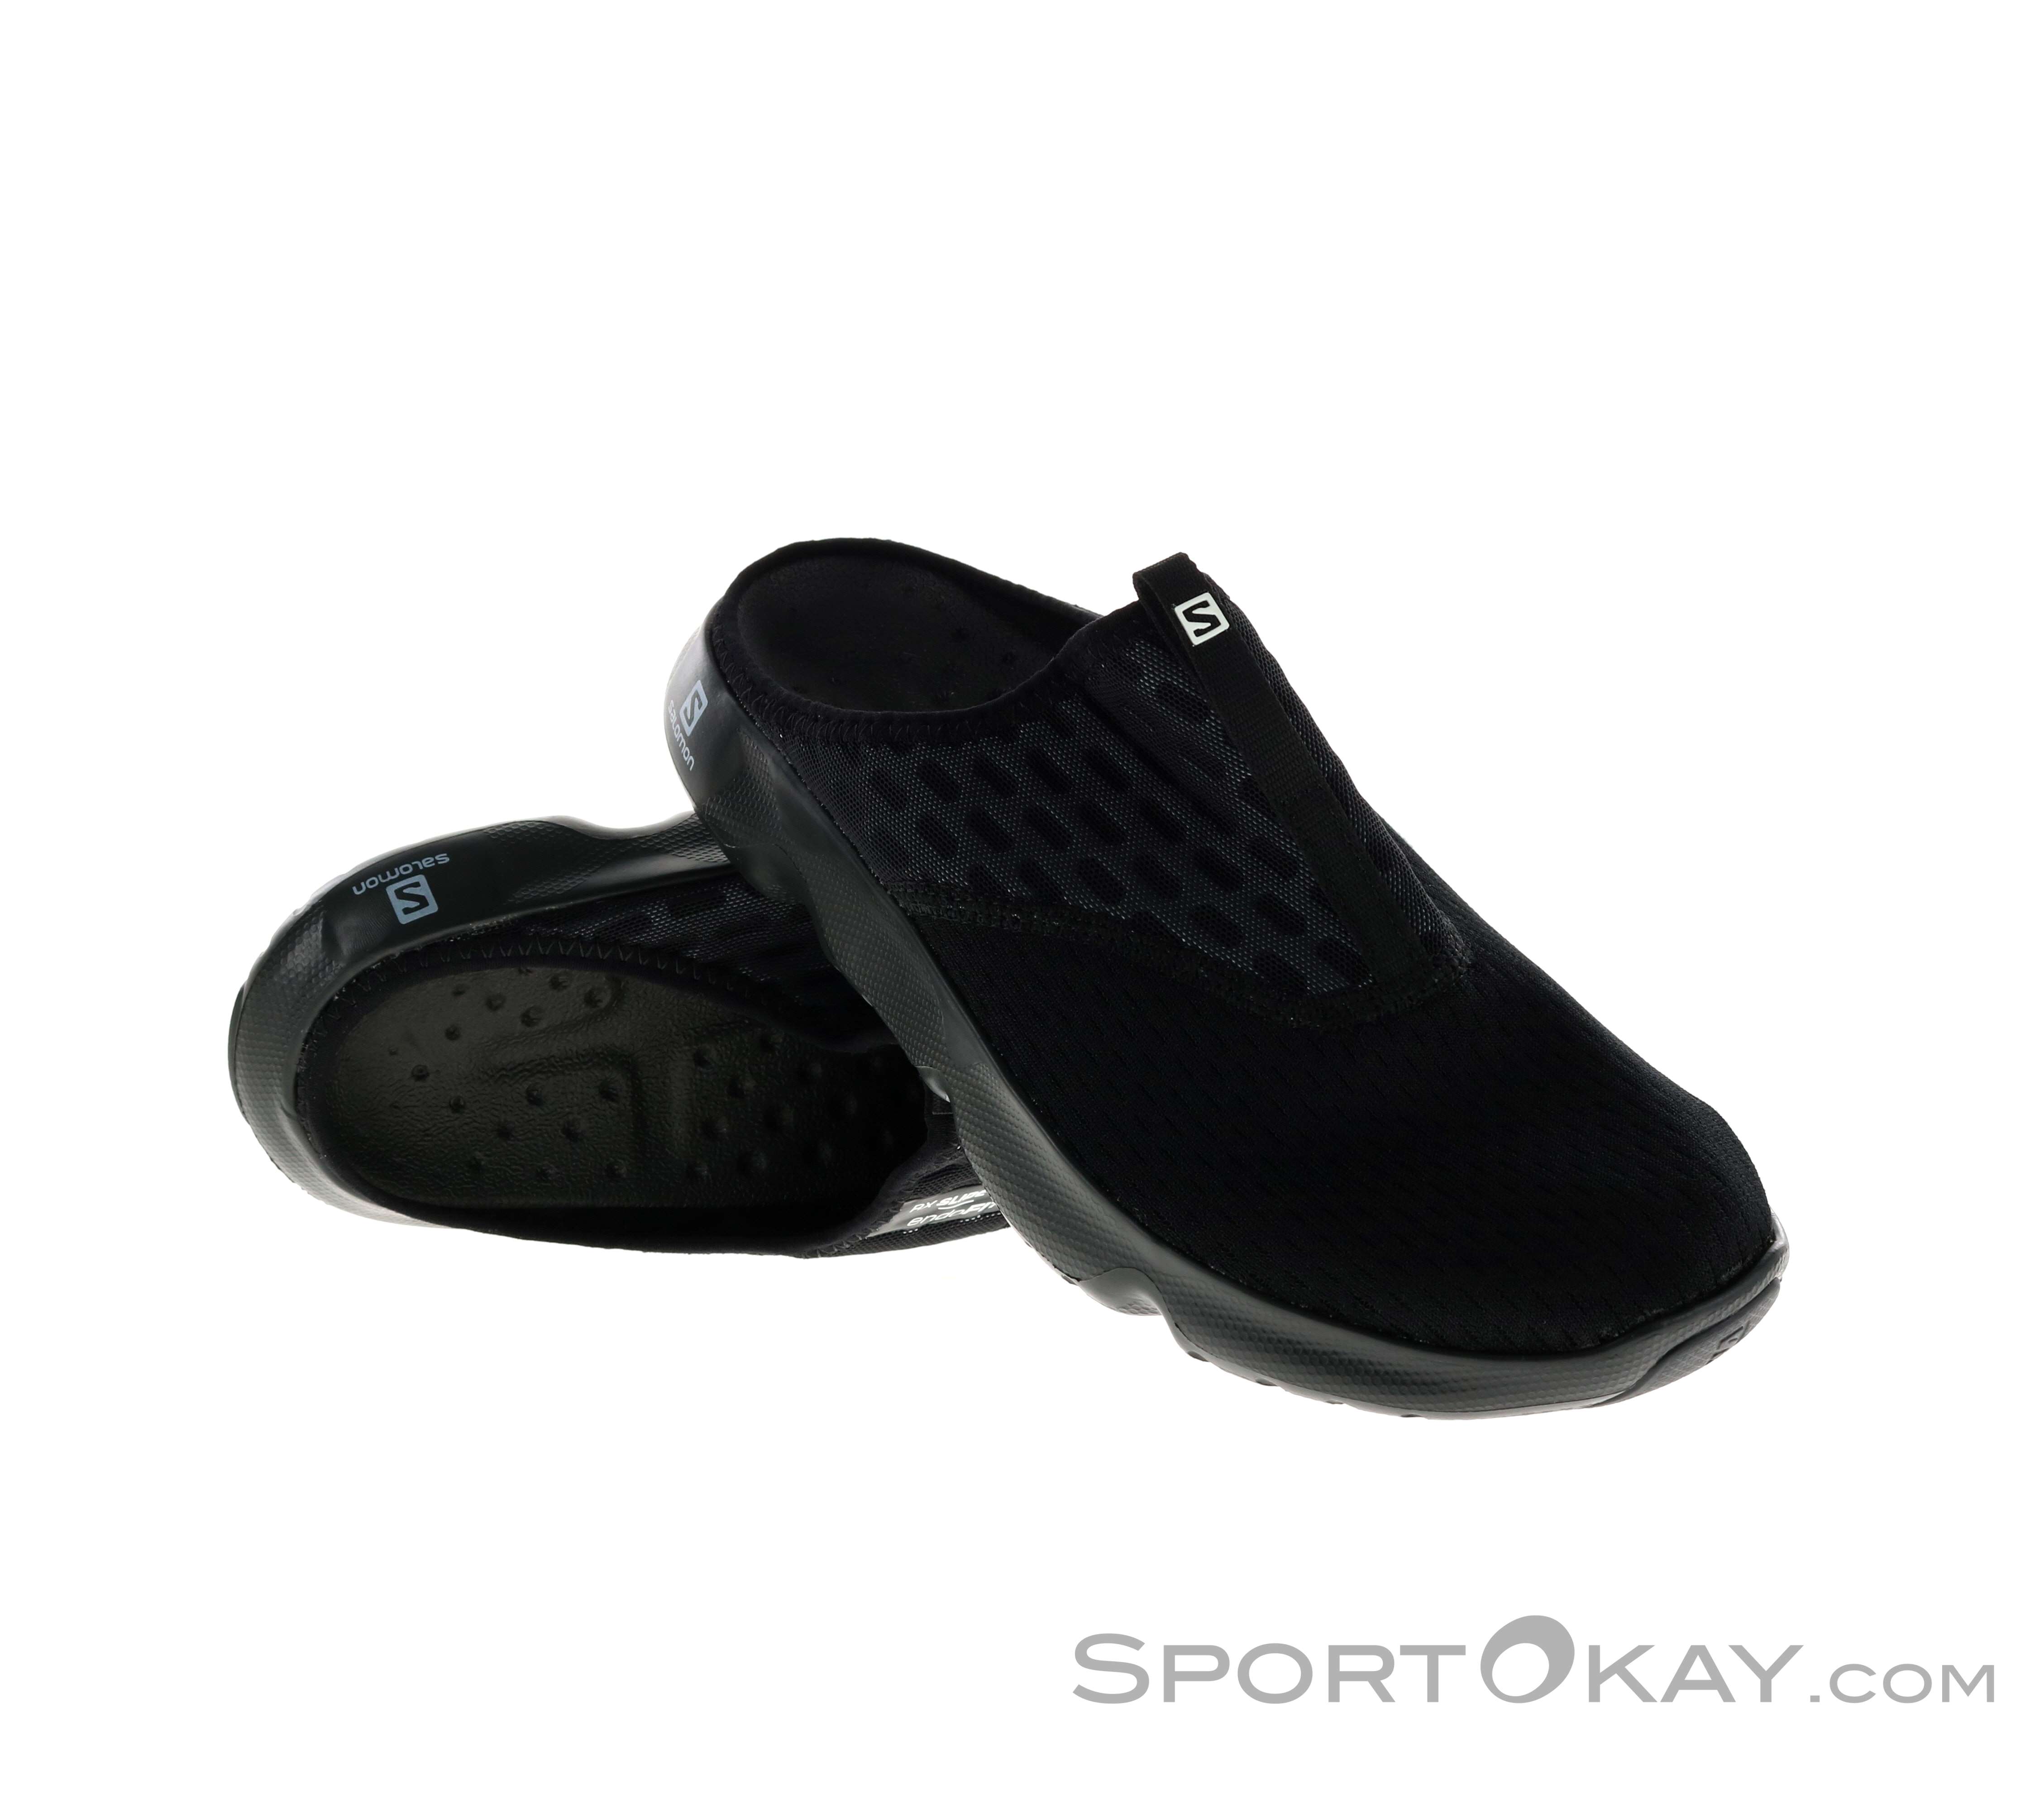 Salomon Reelax 5.0 Mens Sandals - Leisure Shoes Shoes Poles - Outdoor - All